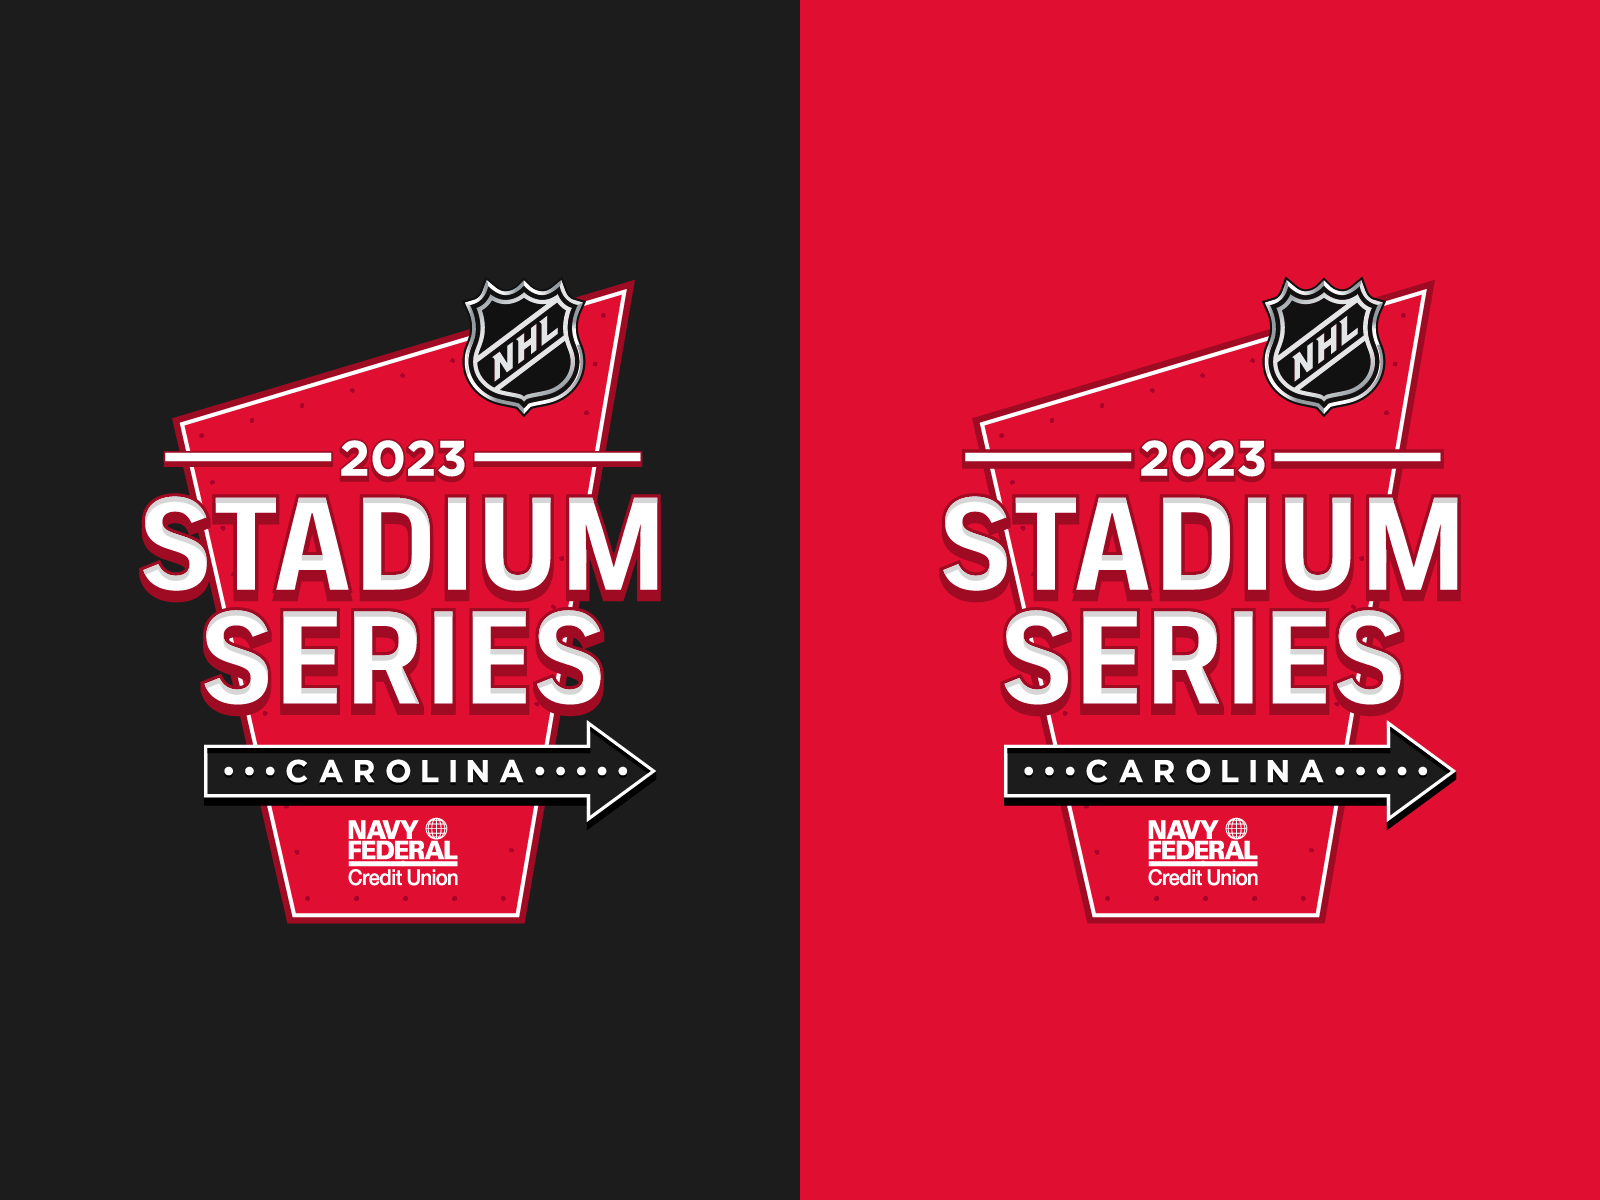 2022 NHL Stadium Series logo concept by Michael Danger on Dribbble